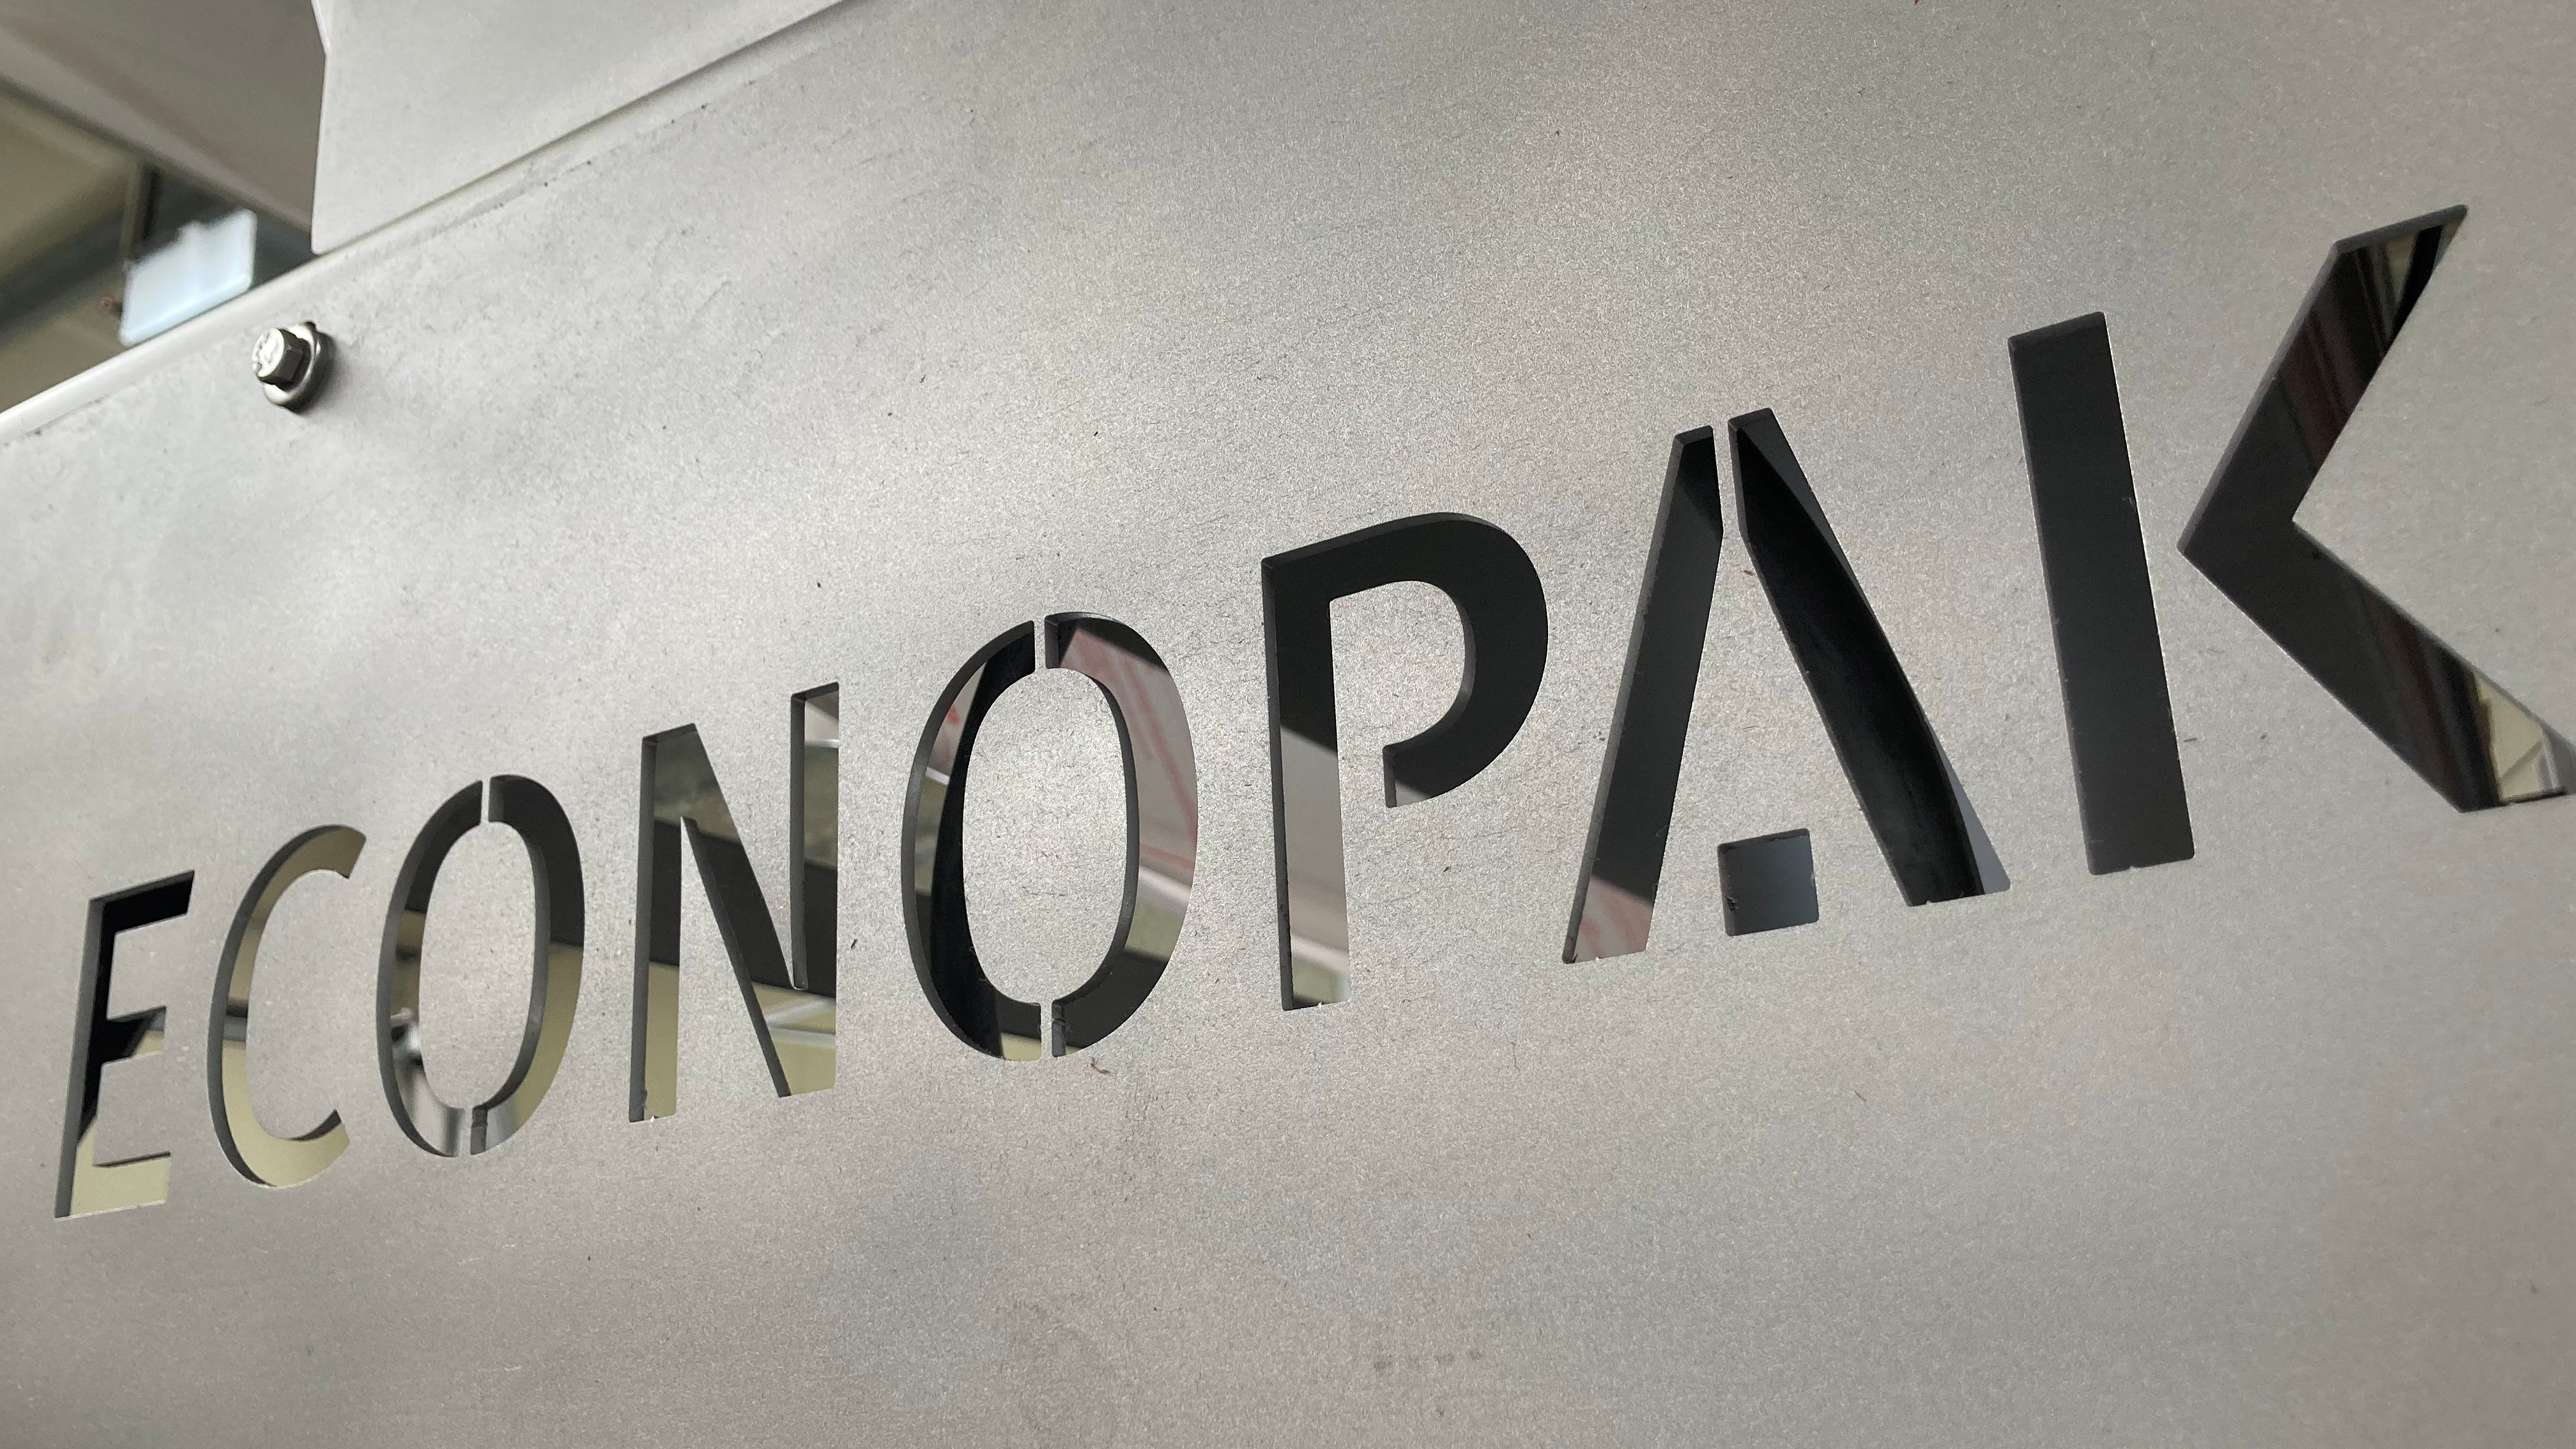 Ekonopak logo carved on grey wall in production hall